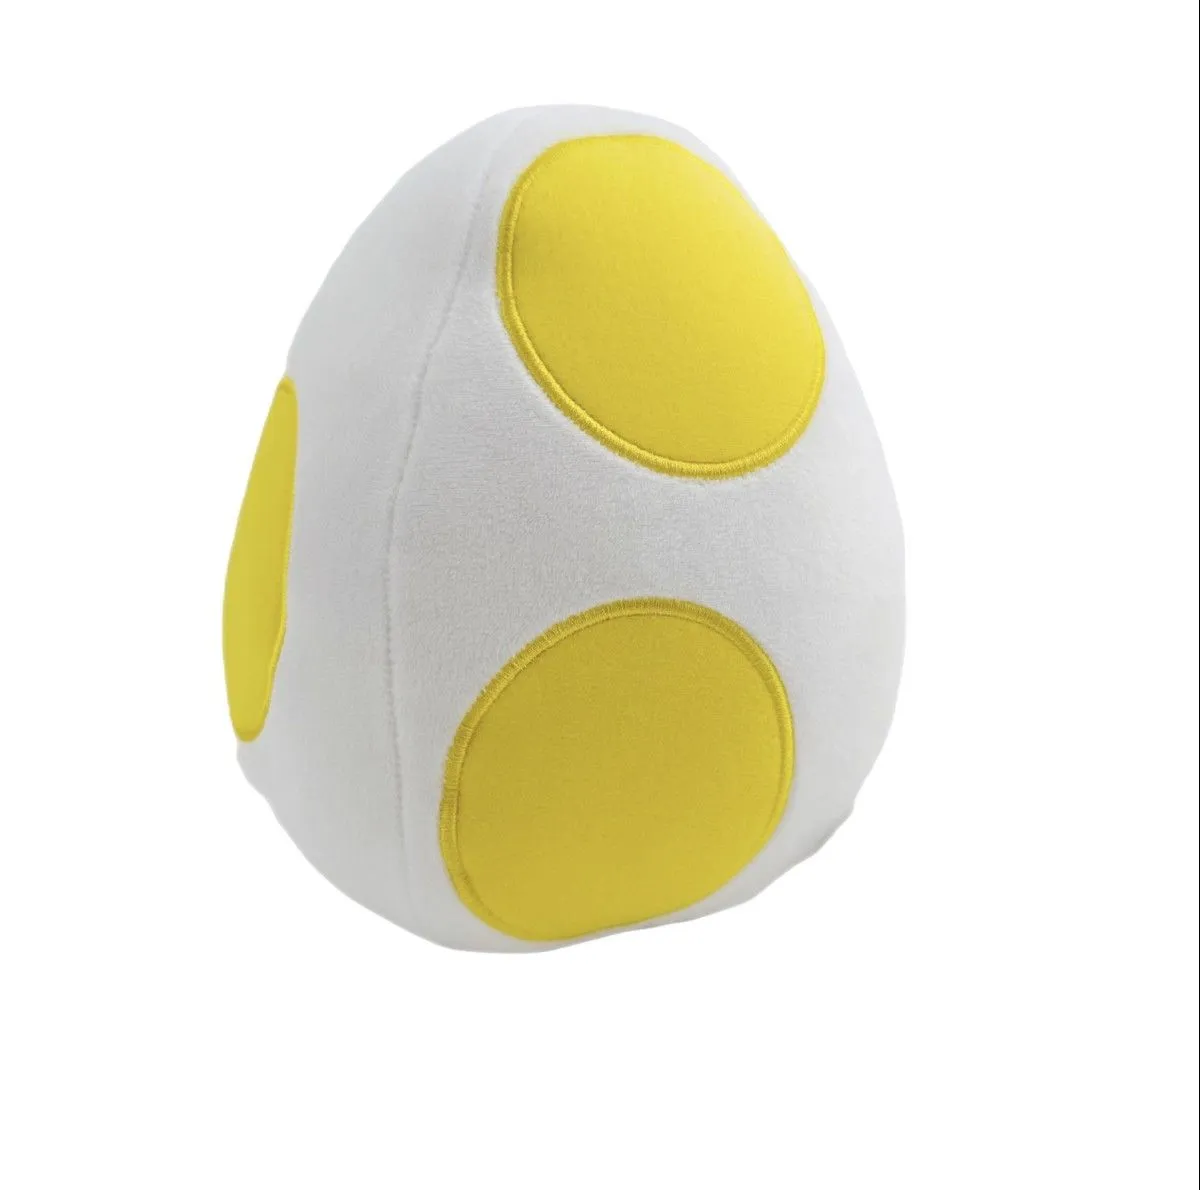 21cm Super Mario Nintendo Yoshi Egg Soft Plush Toy